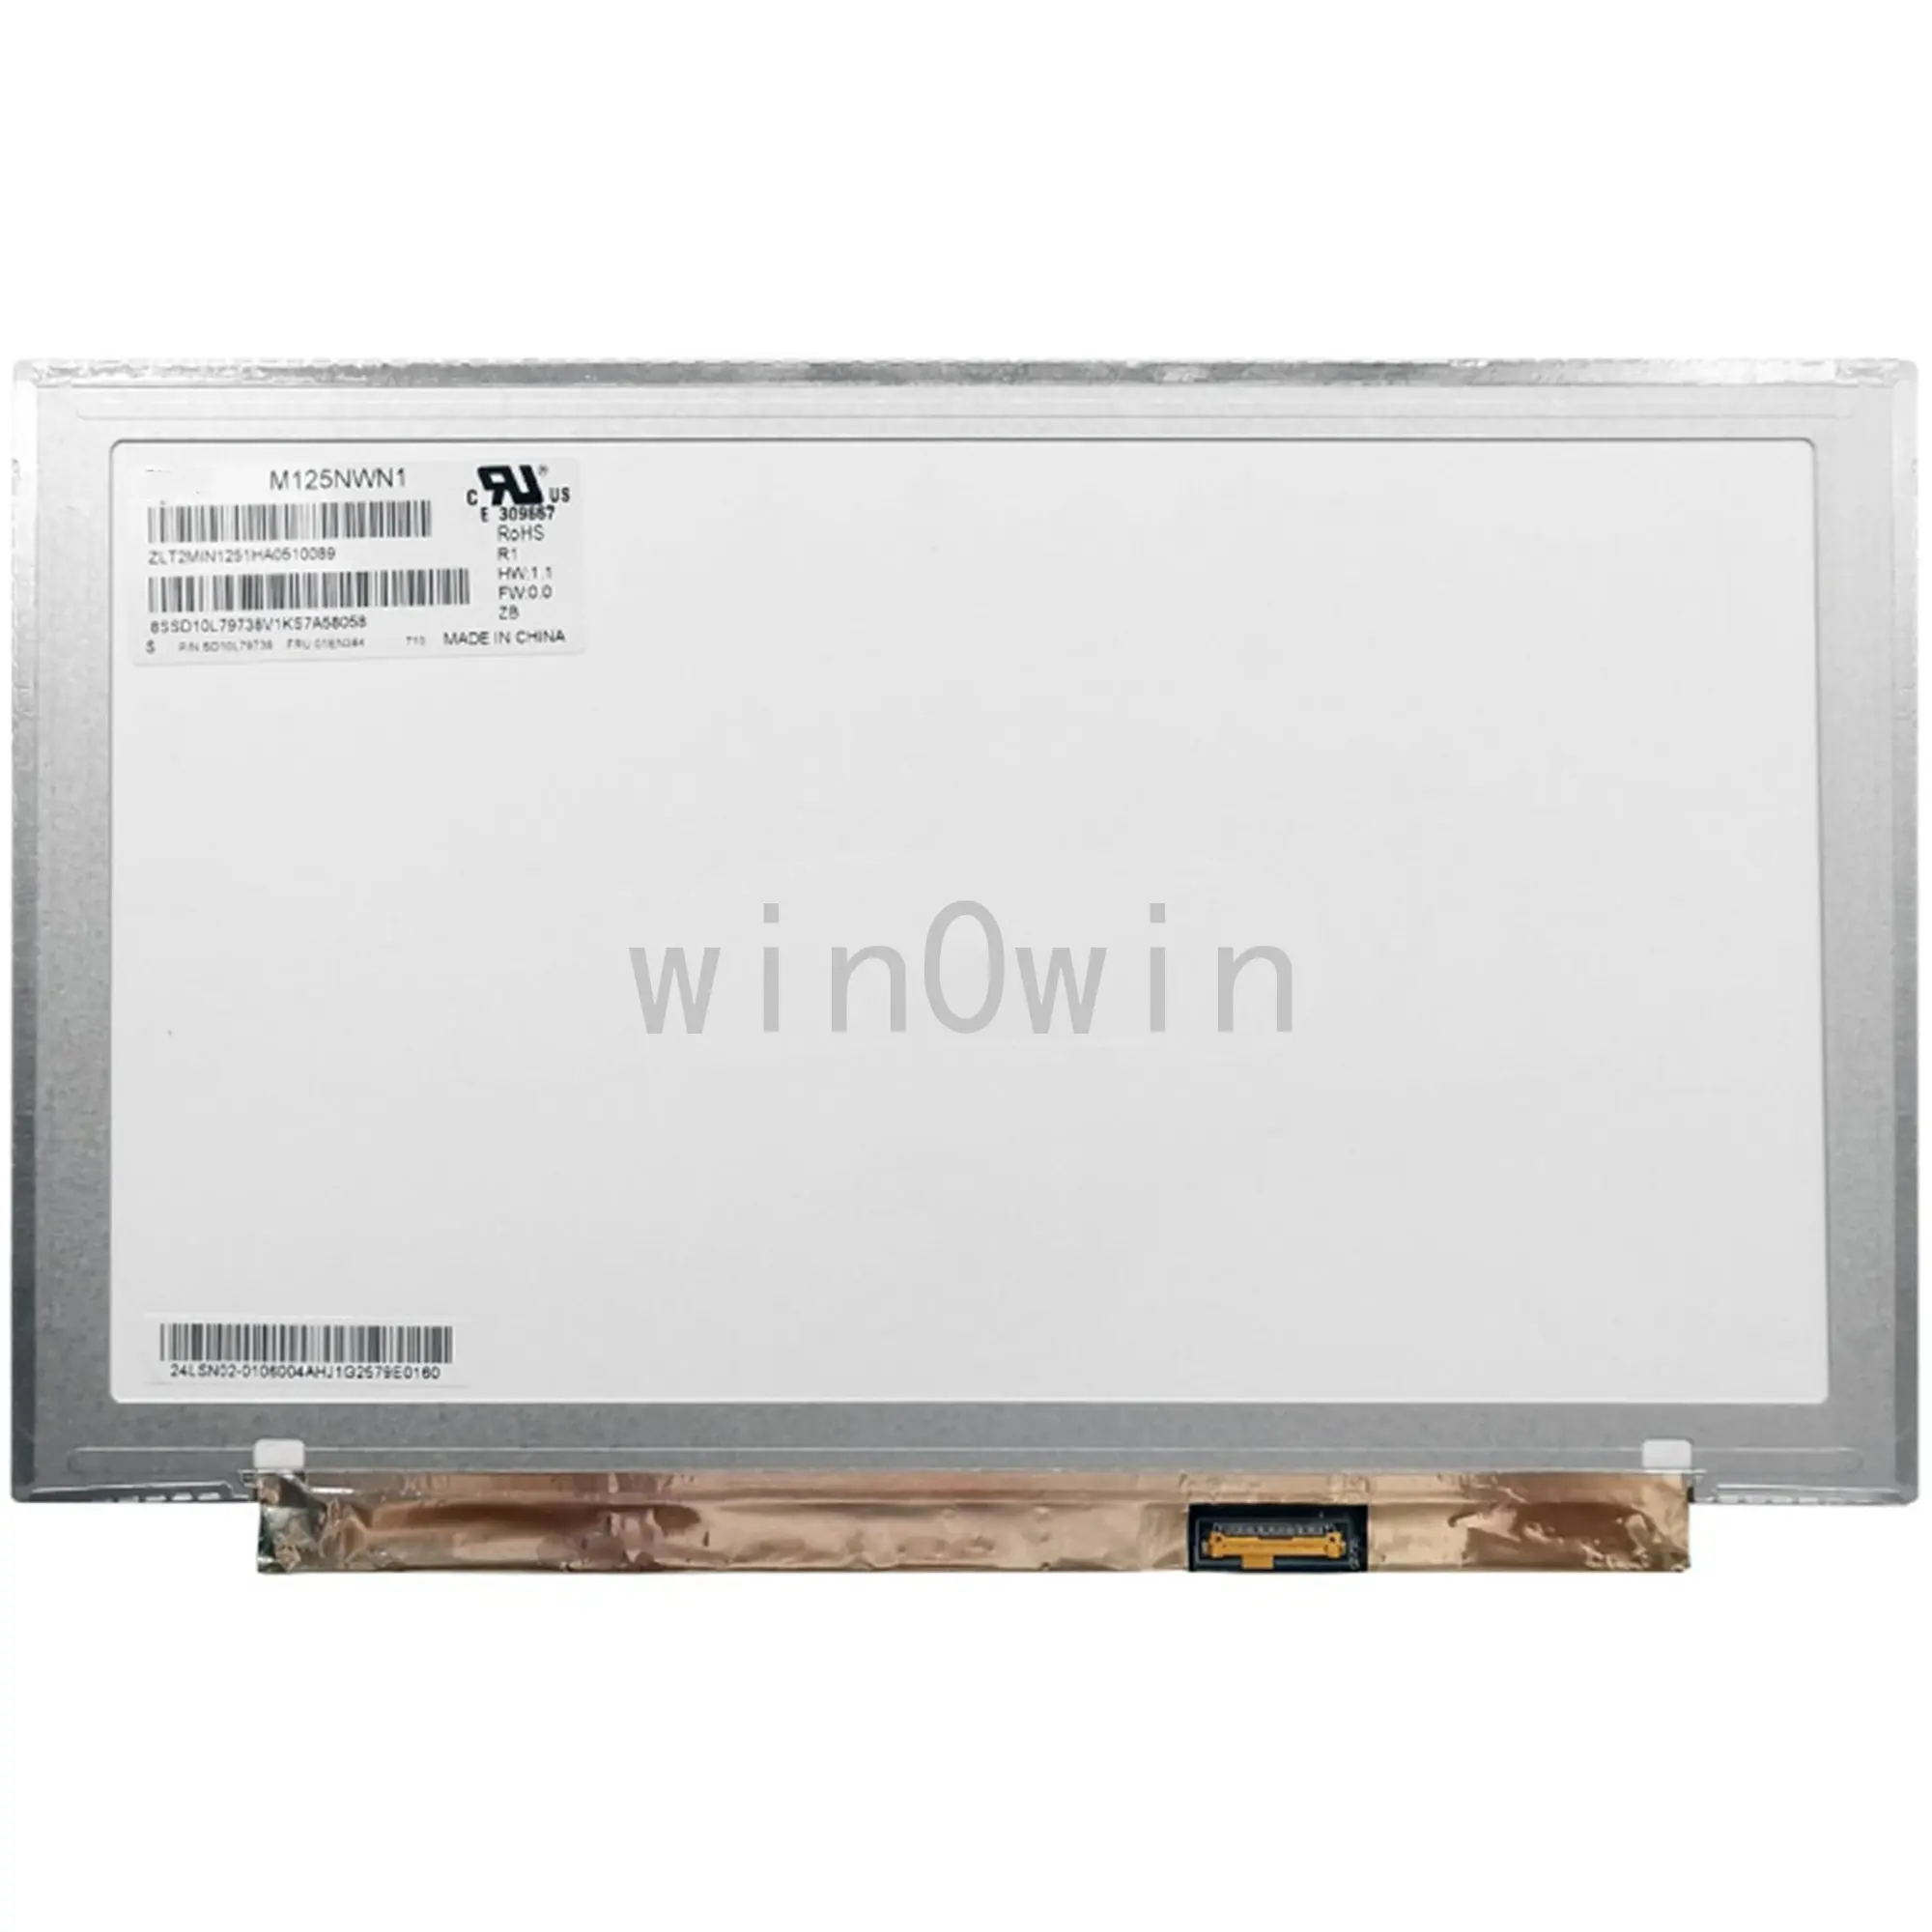 m125nwn1-r1-fit-hb125wx1-200-b125xtn010-1366-768-edp-30-pins-laptop-lcd-screen-panel-matrix